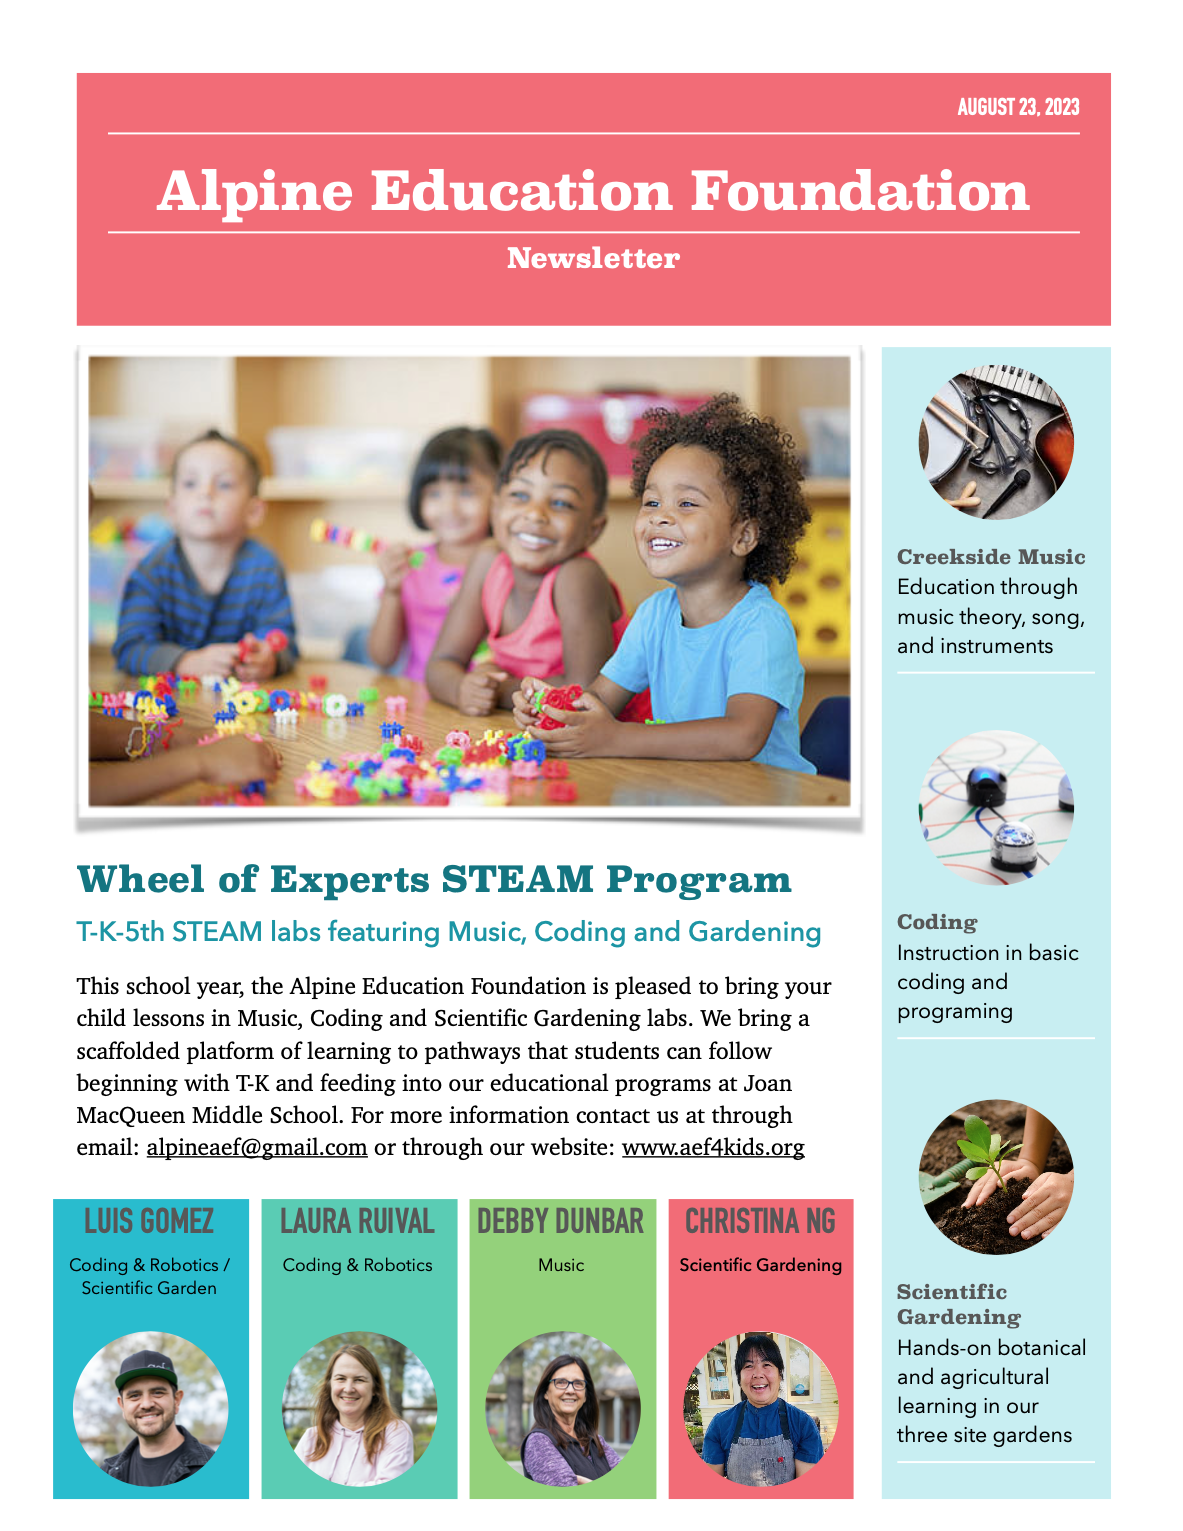 Alpine Education Foundation News